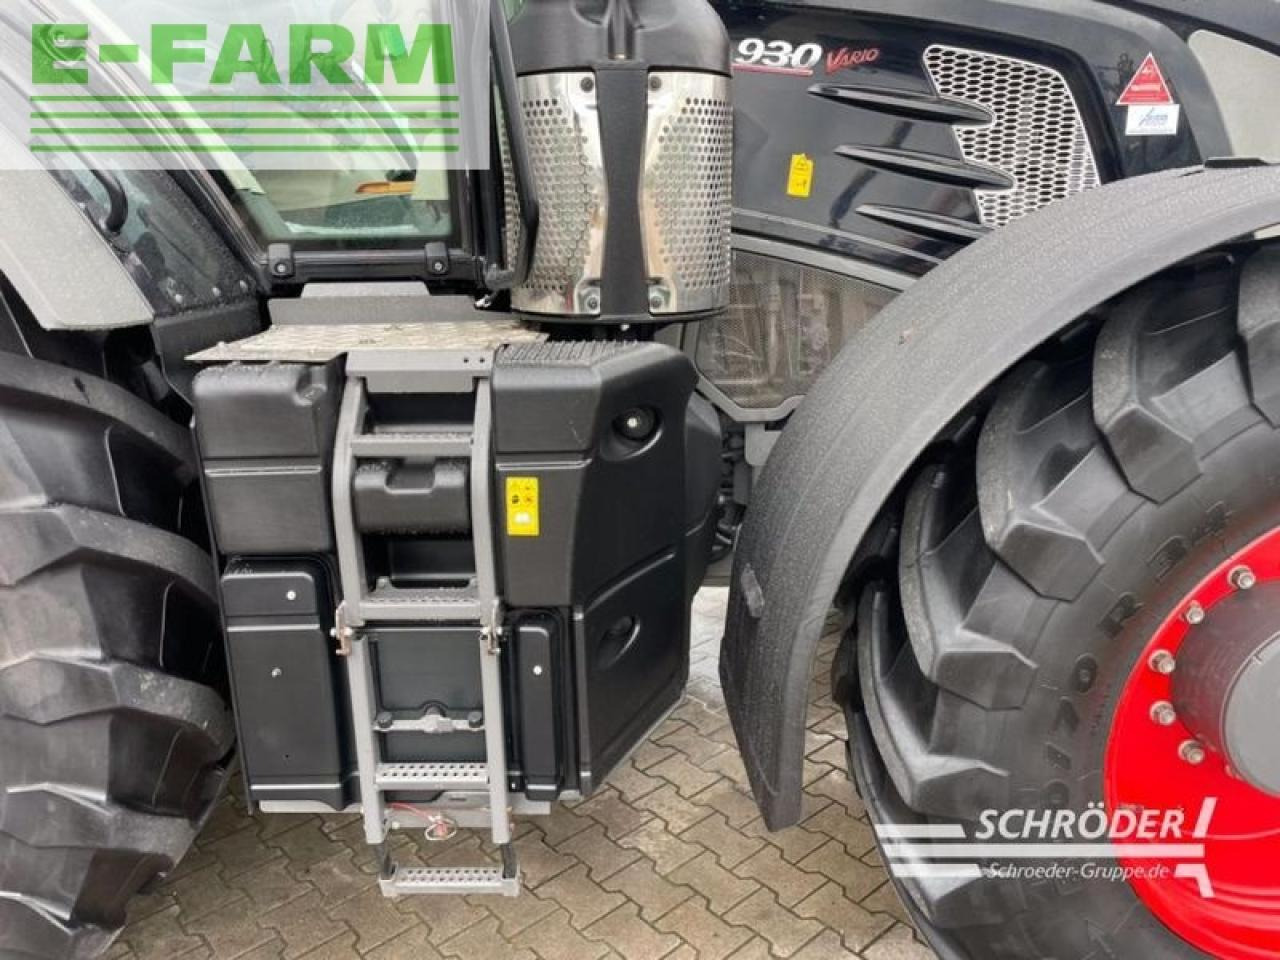 Farm tractor Fendt 930 vario s4 profi plus: picture 16